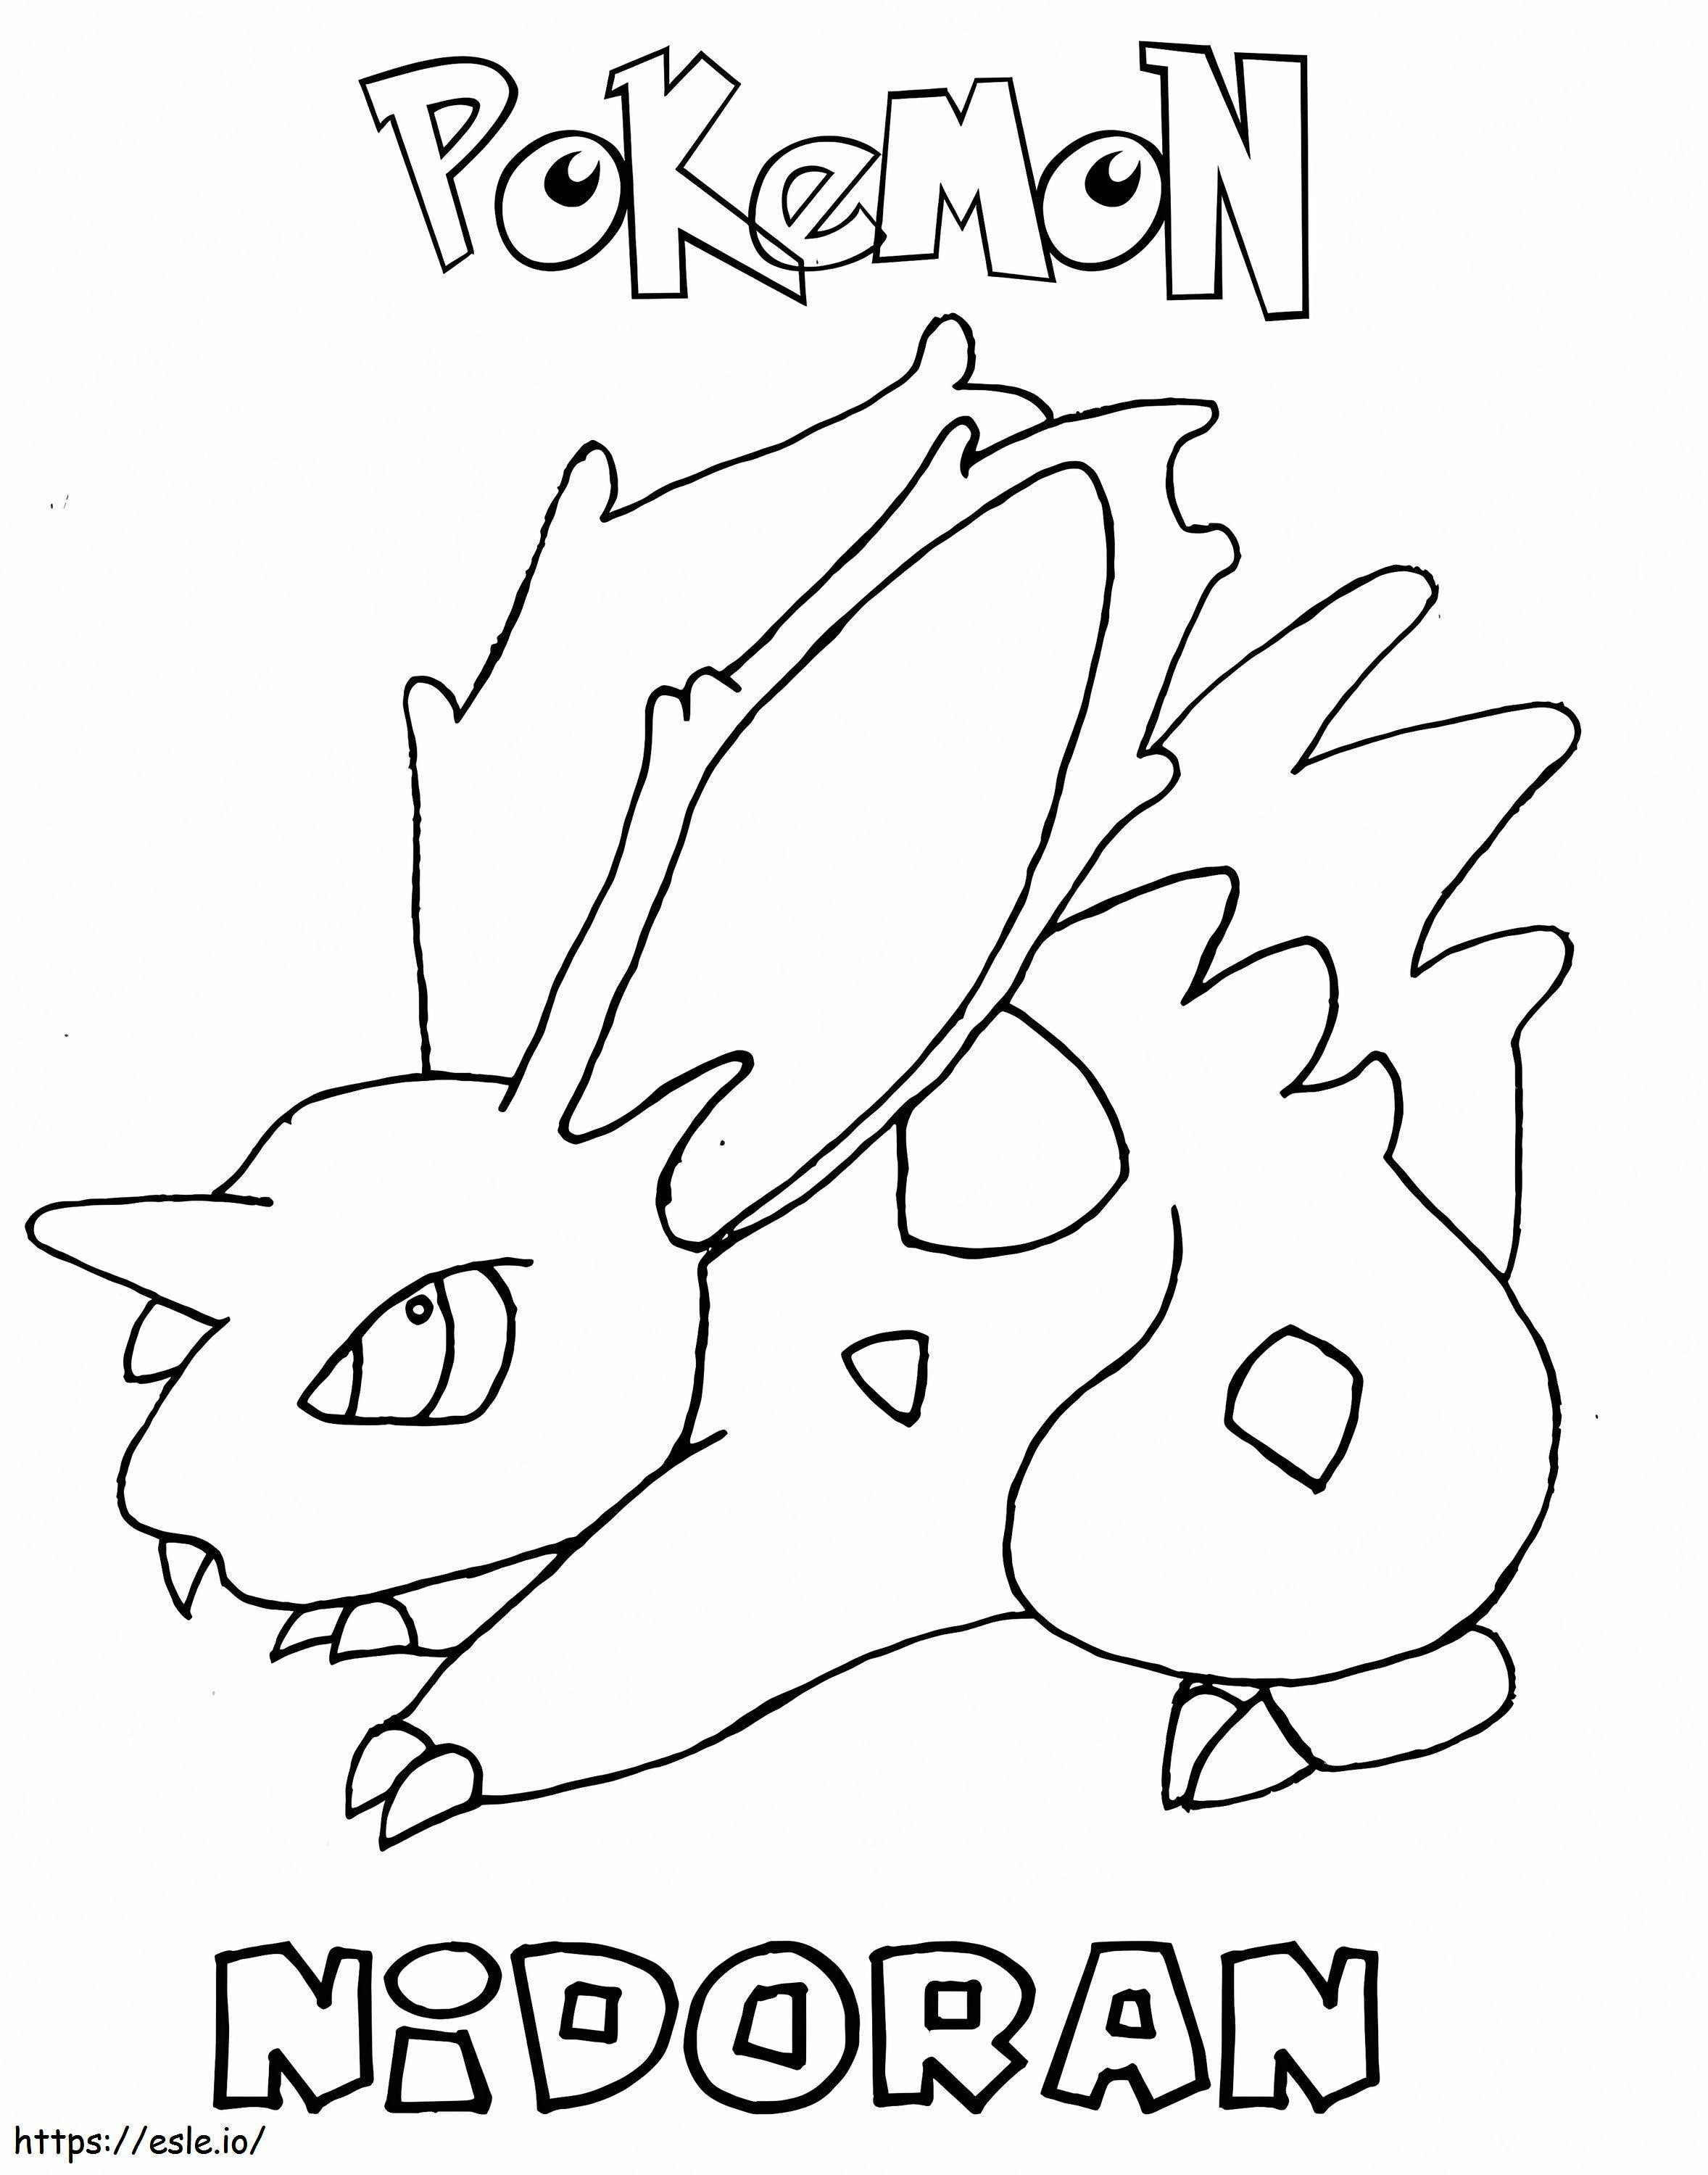 Pokémon Nidoranm para impressão para colorir